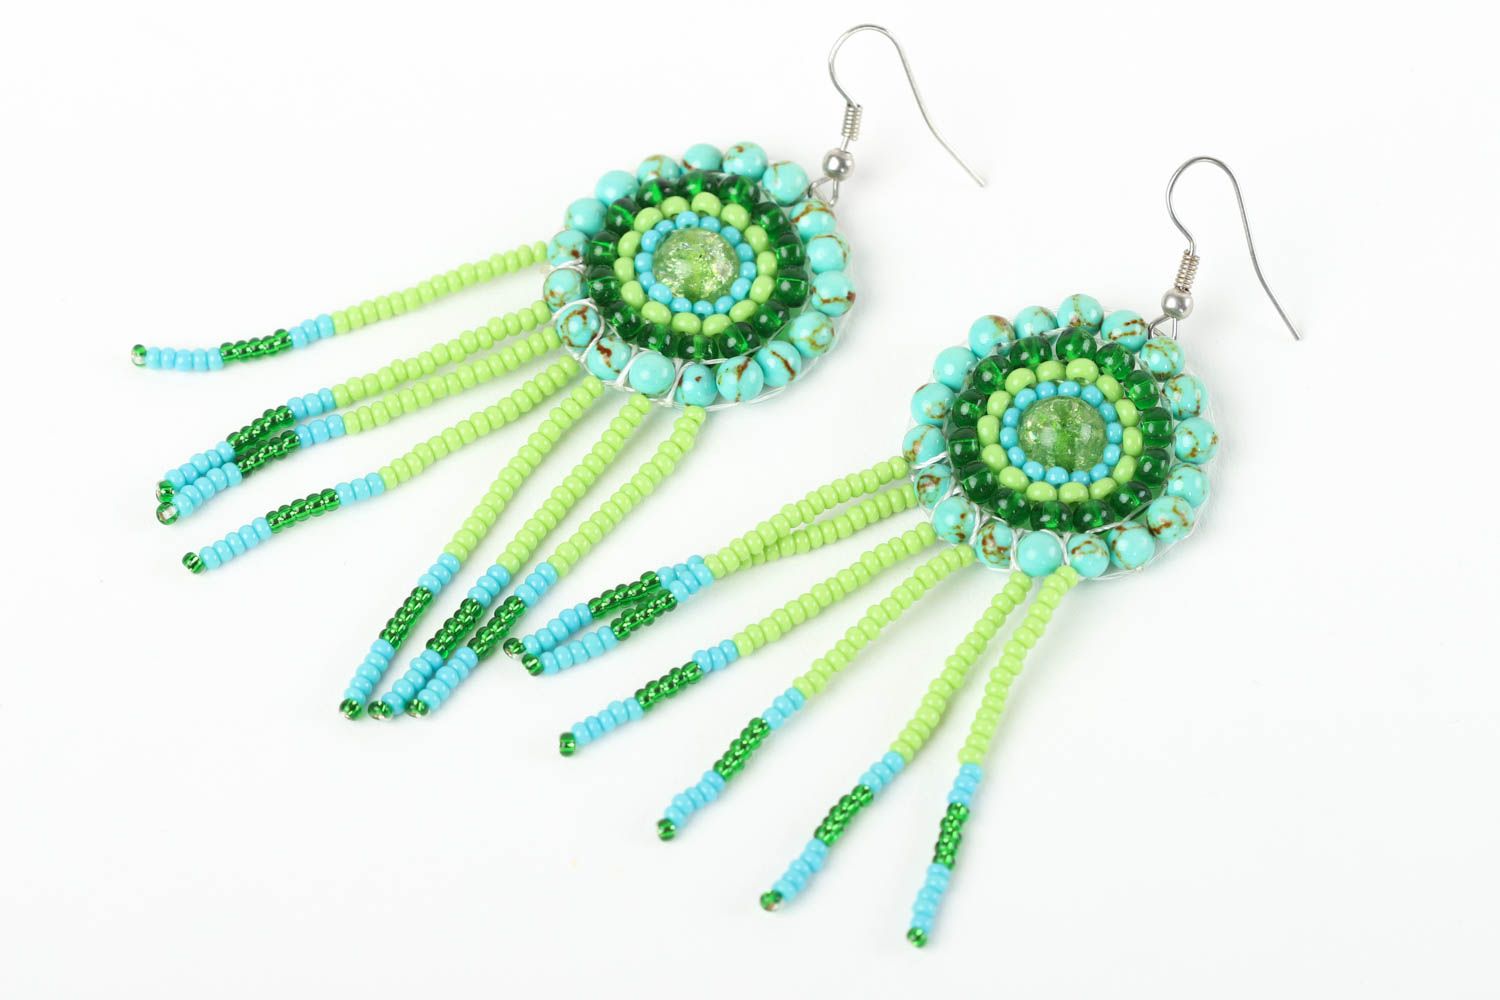 Handmade turquoise earrings jewelry in Indian style designer earrings photo 2